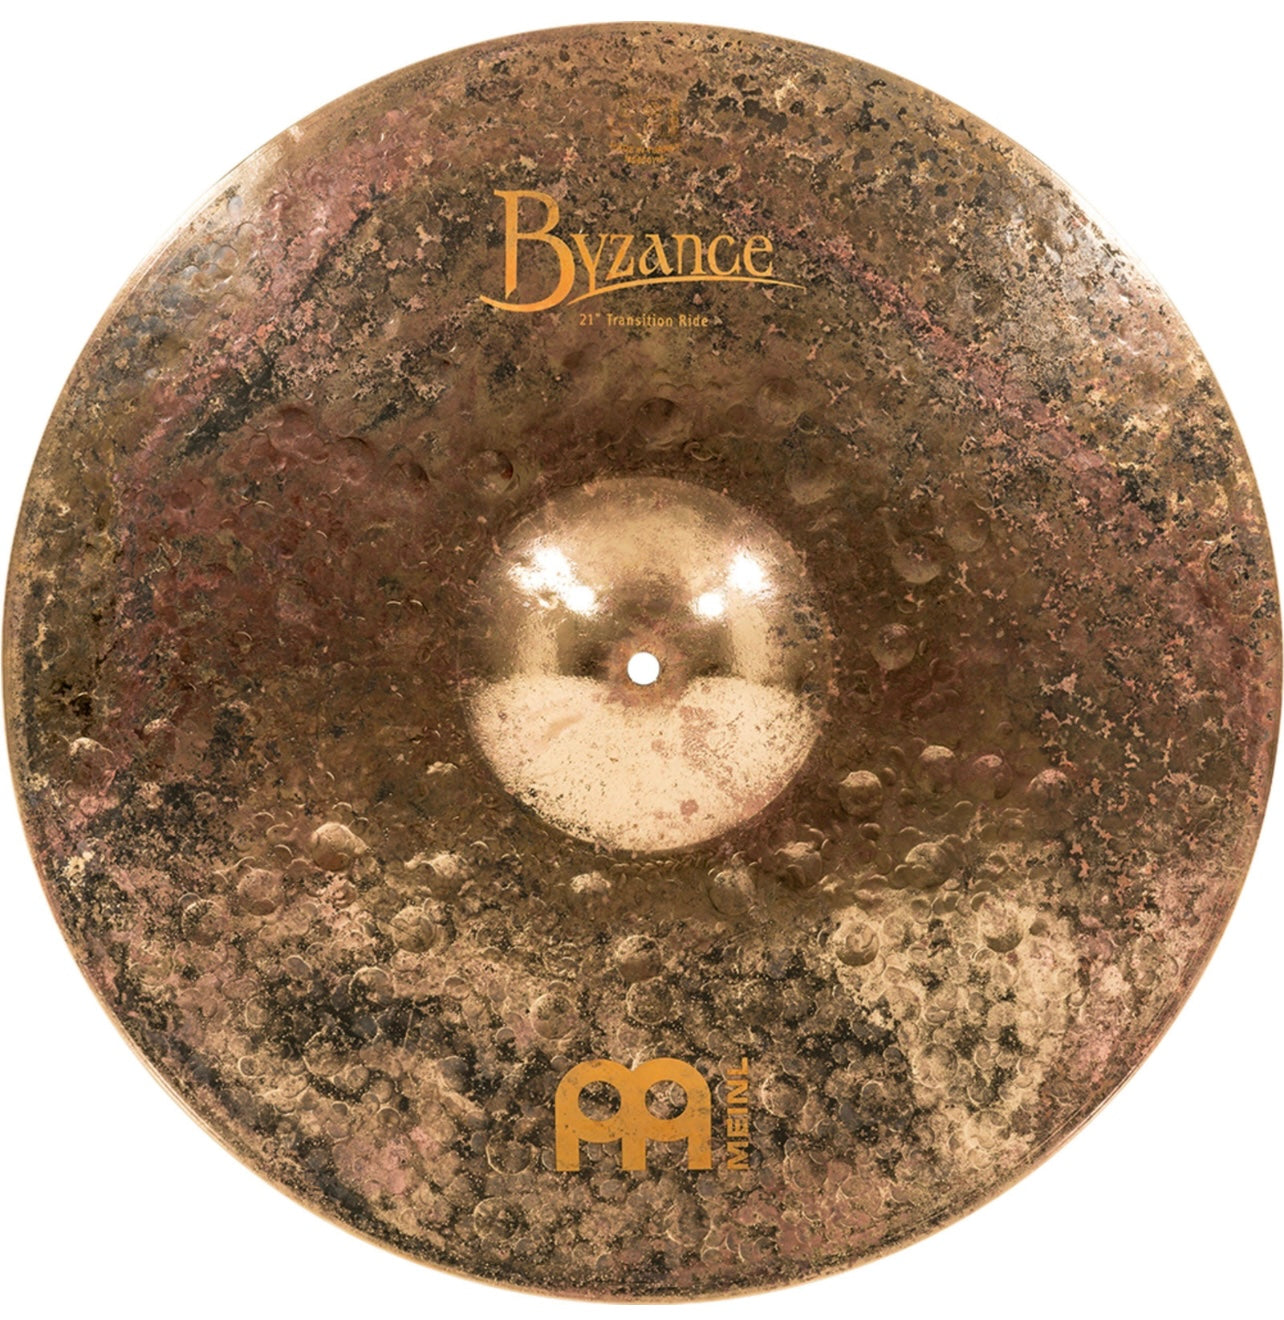 Meinl Byzance 21” Transition Ride Cymbal